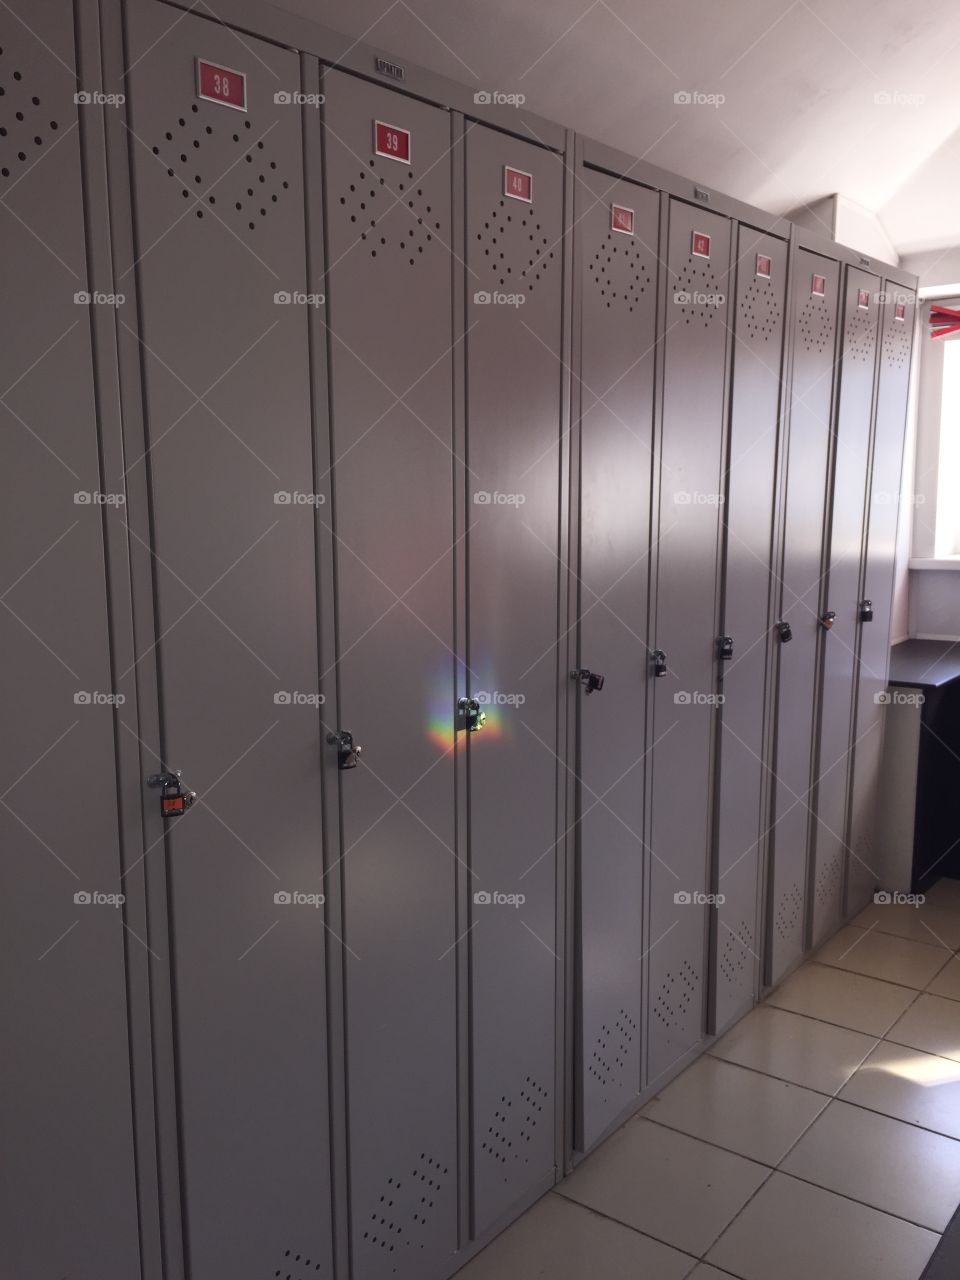 Rainbow in the locker room